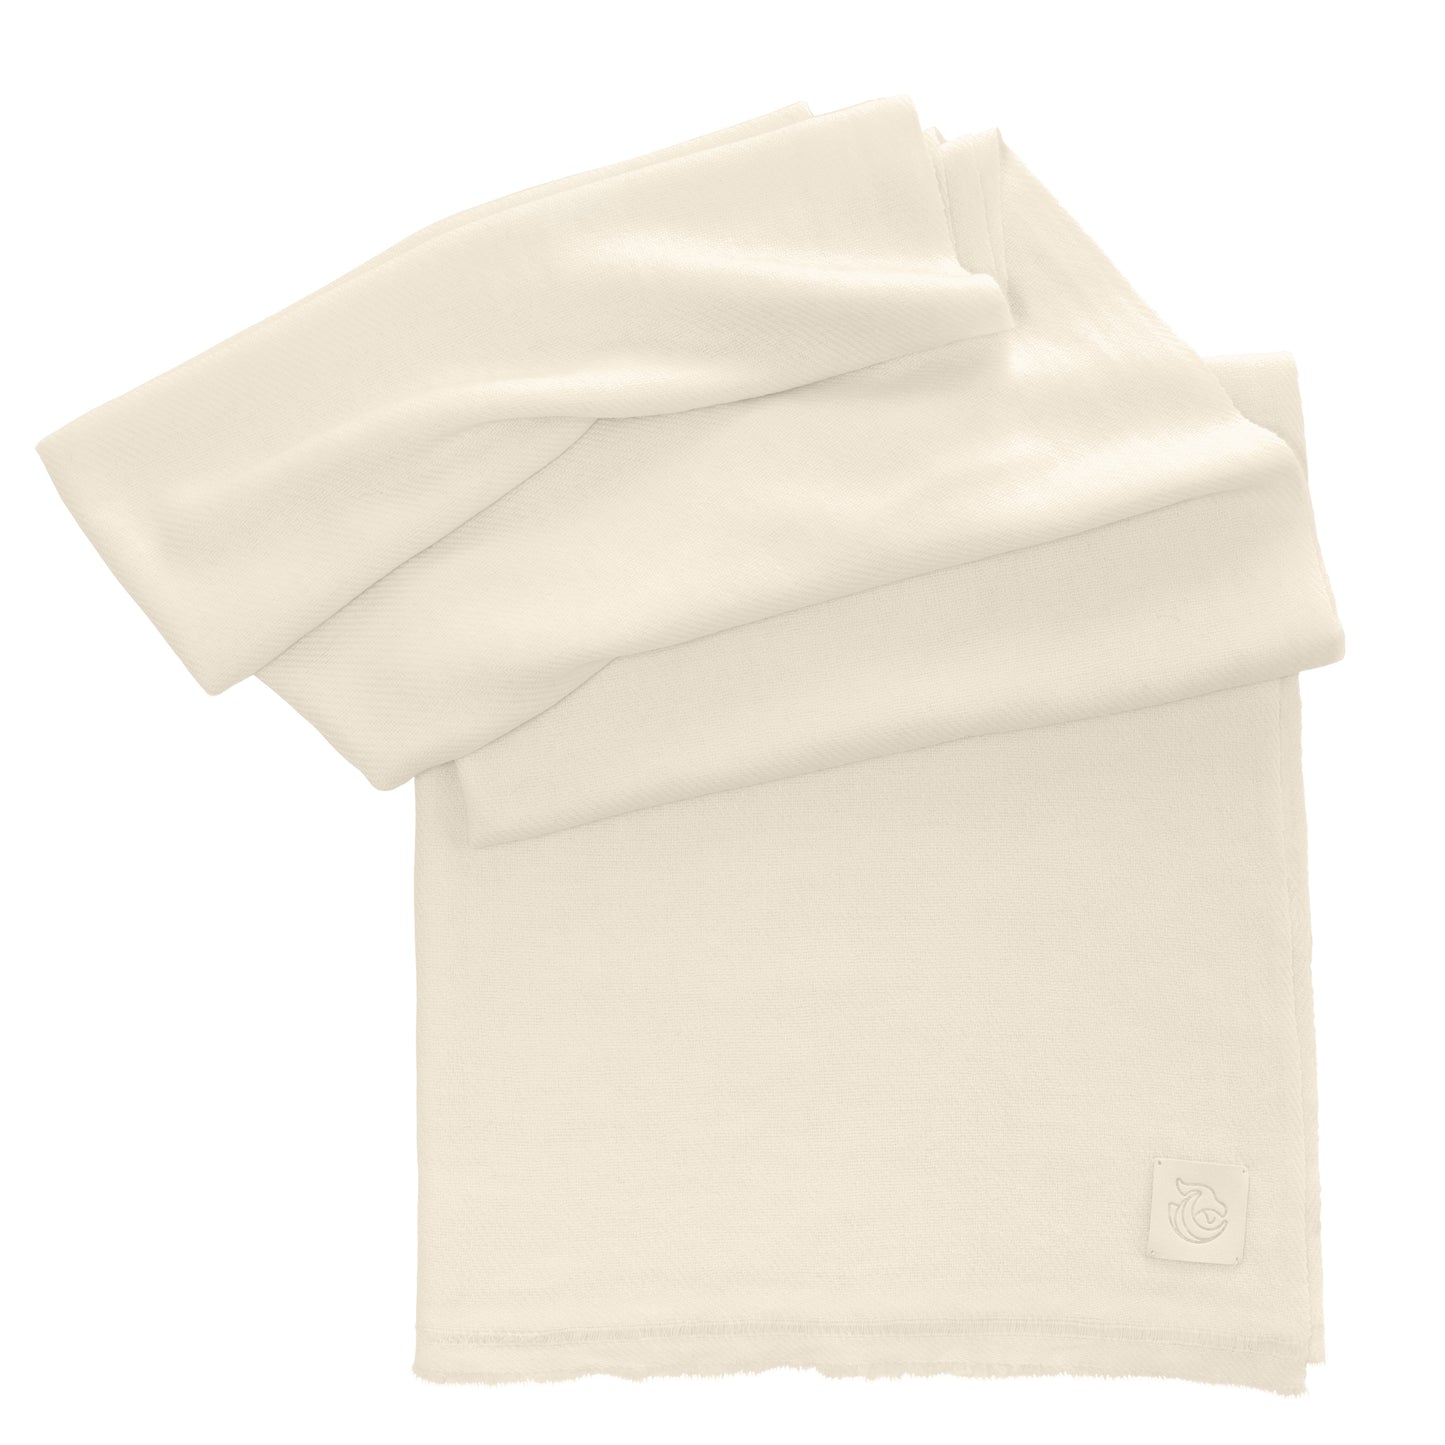 A woven cashmere shawl natural white